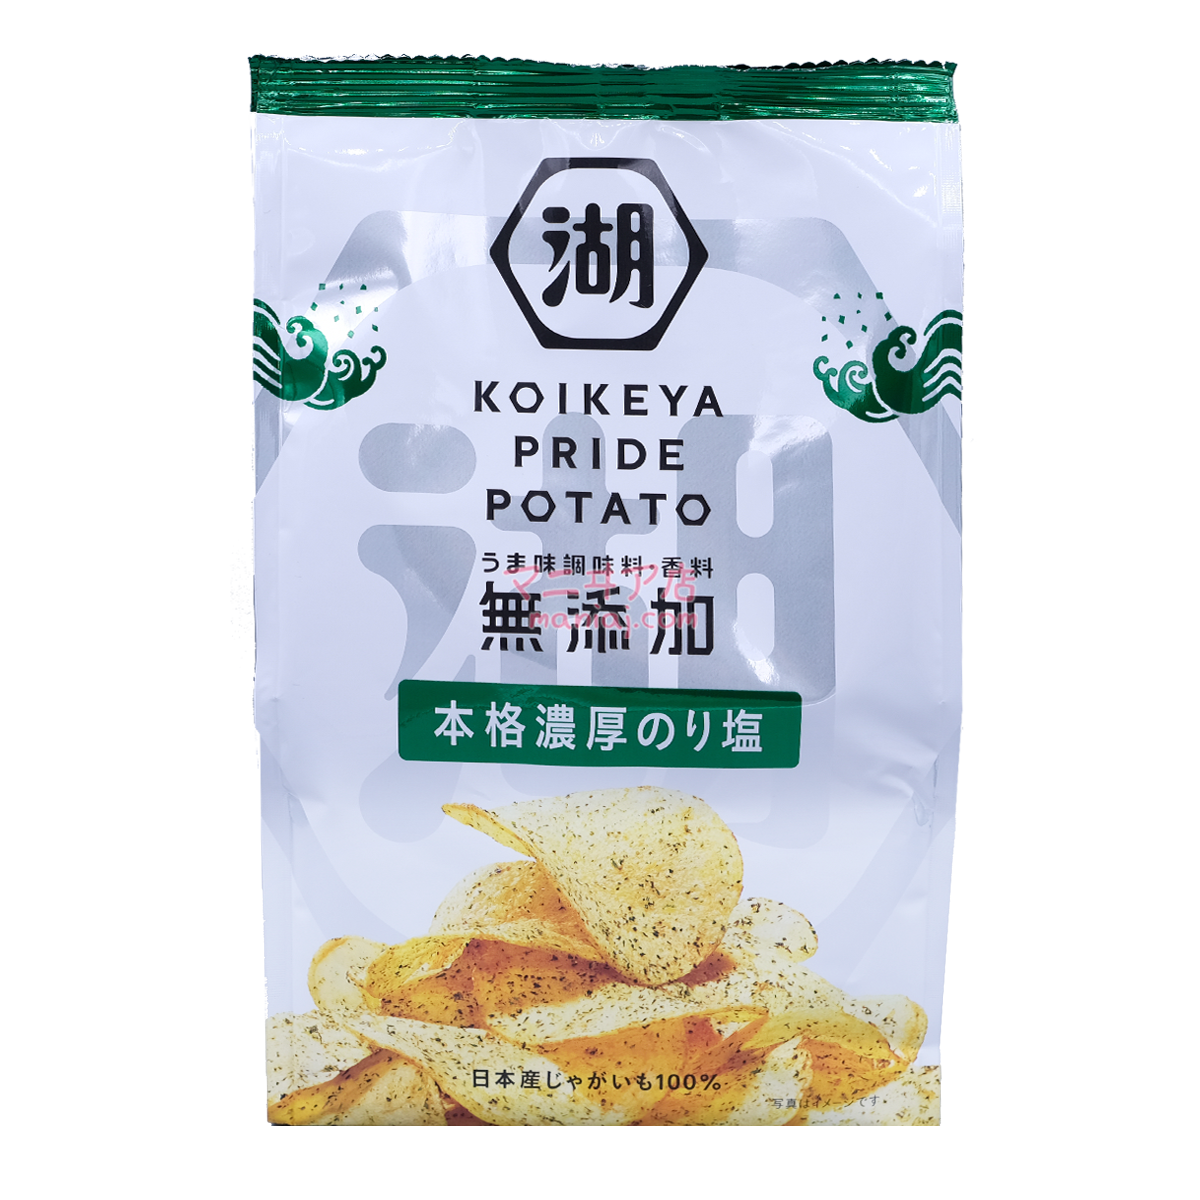 PRIDE POTATO Authentic Thick Seaweed Salt Potato Chips